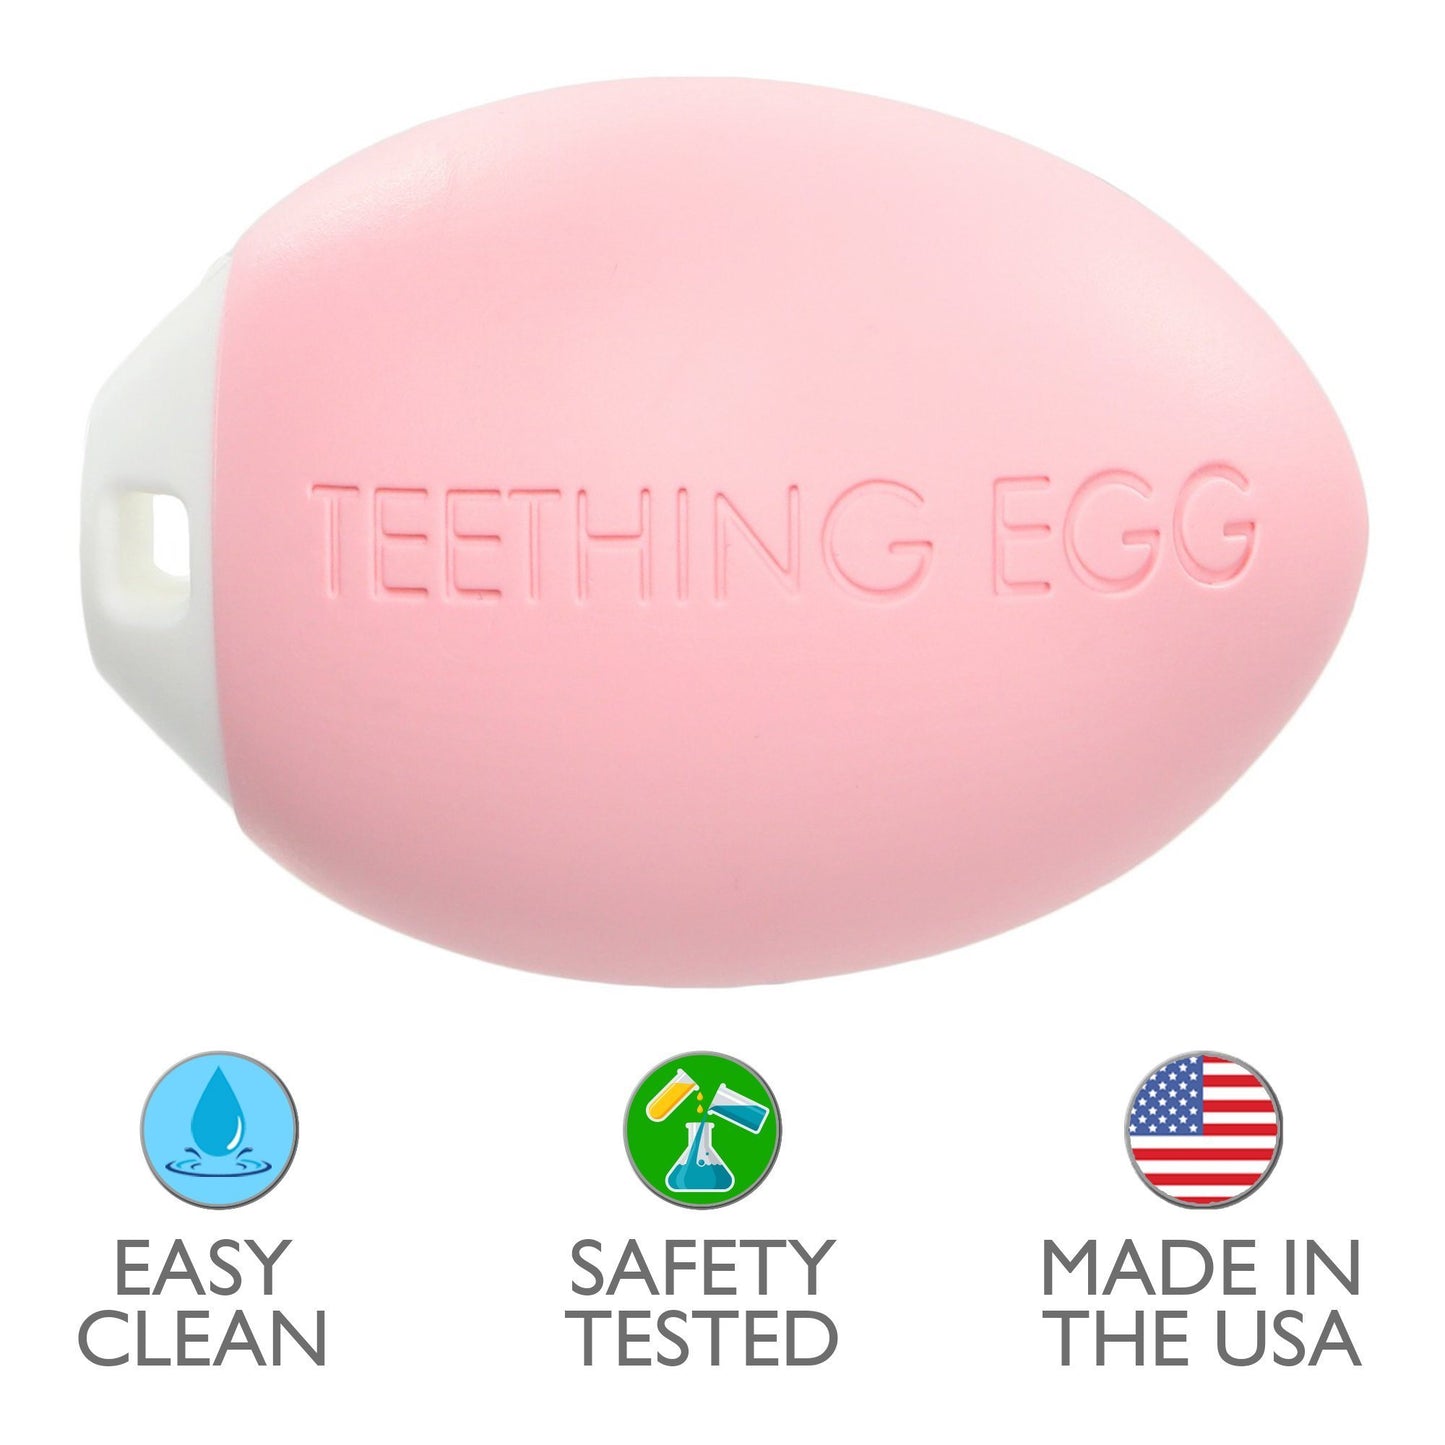 The Teething Egg Teether - Pink